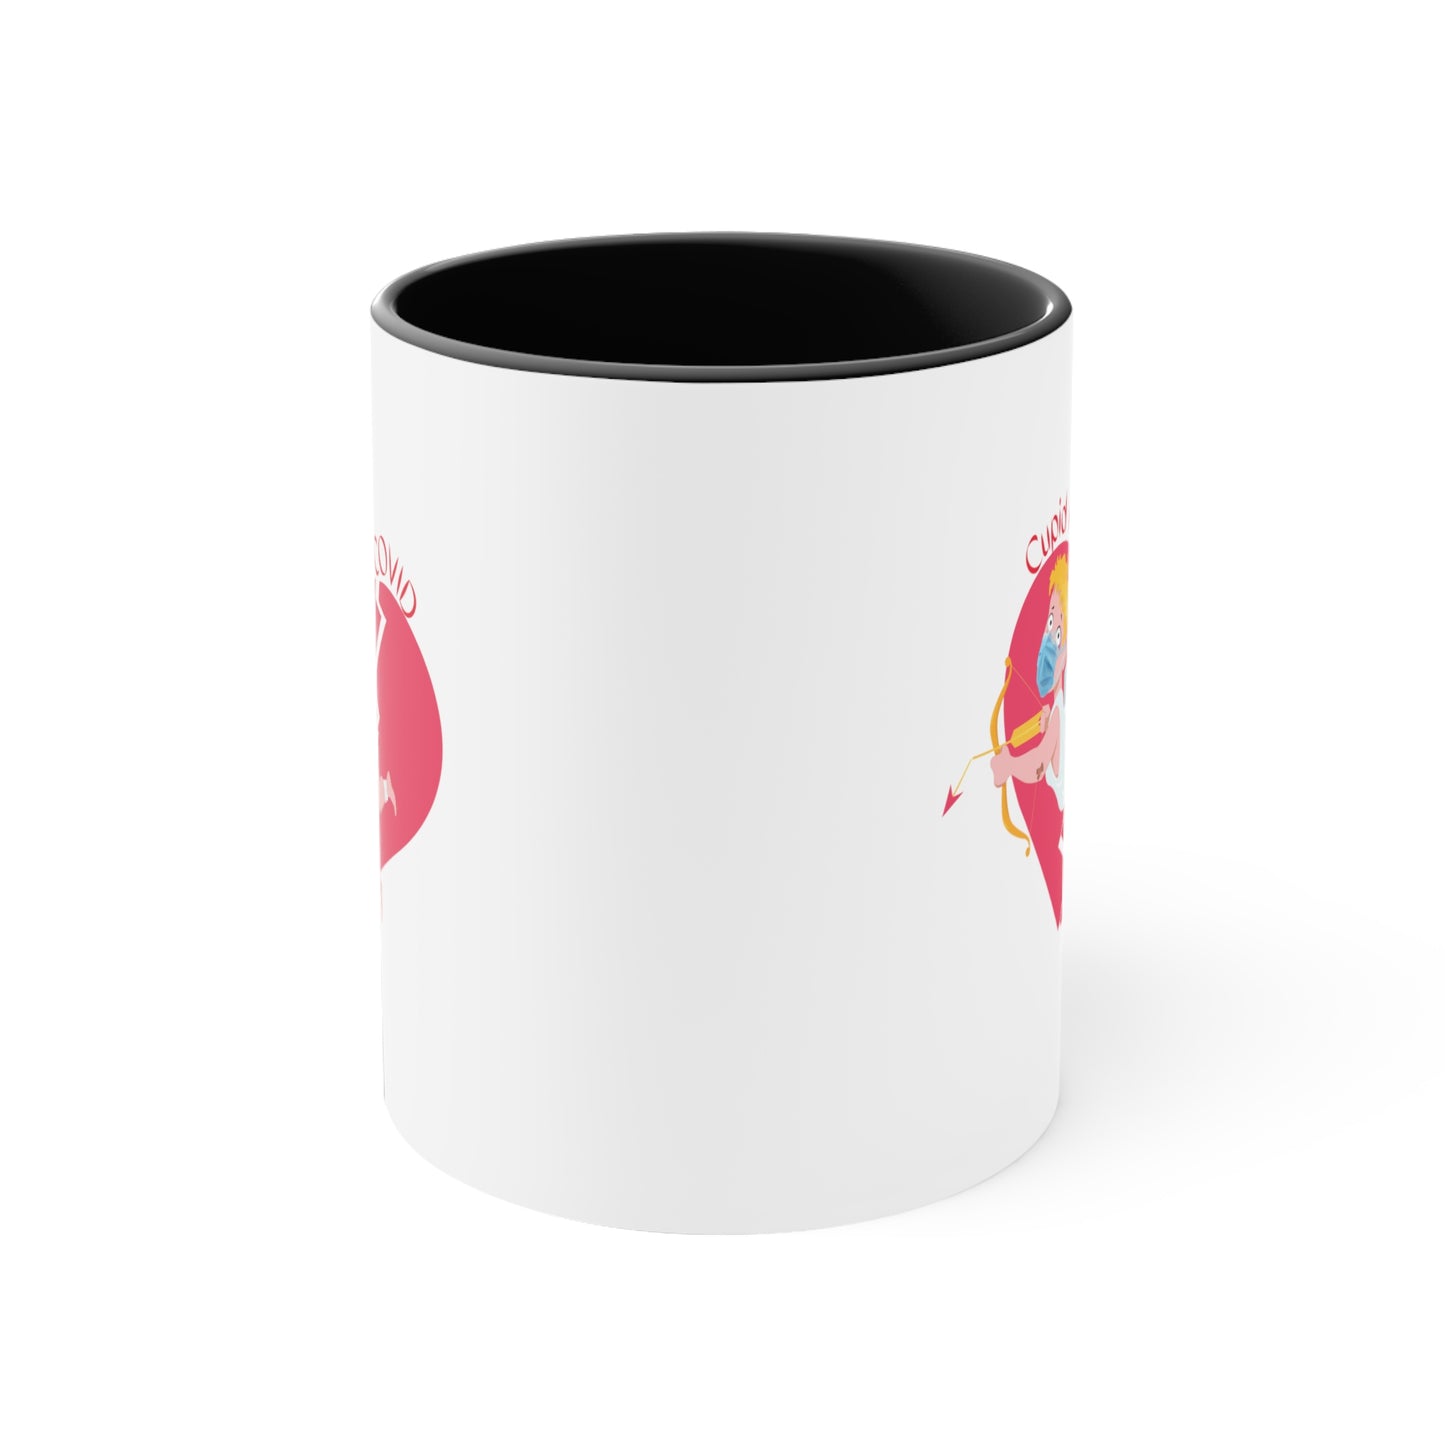 Cupid has COVID Accent Coffee Mug (11oz)